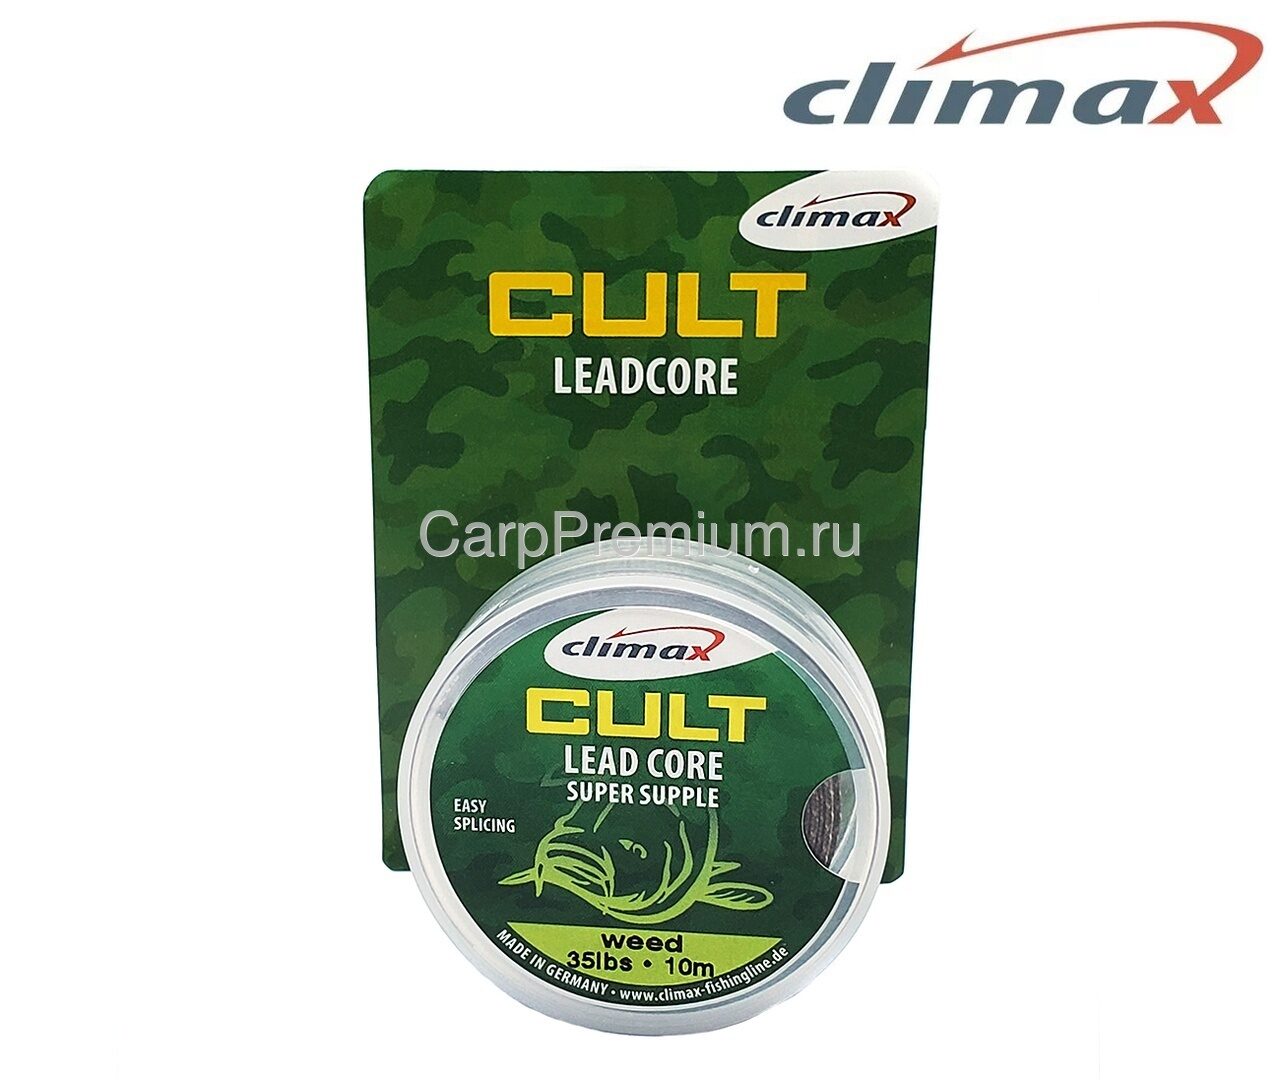 Лидкор со свинцовым стержнем Зеленый Сlimax (Клаймакс) - Leadcore-Super Supple Weed 17.4 кг / 35 lb, 10 м